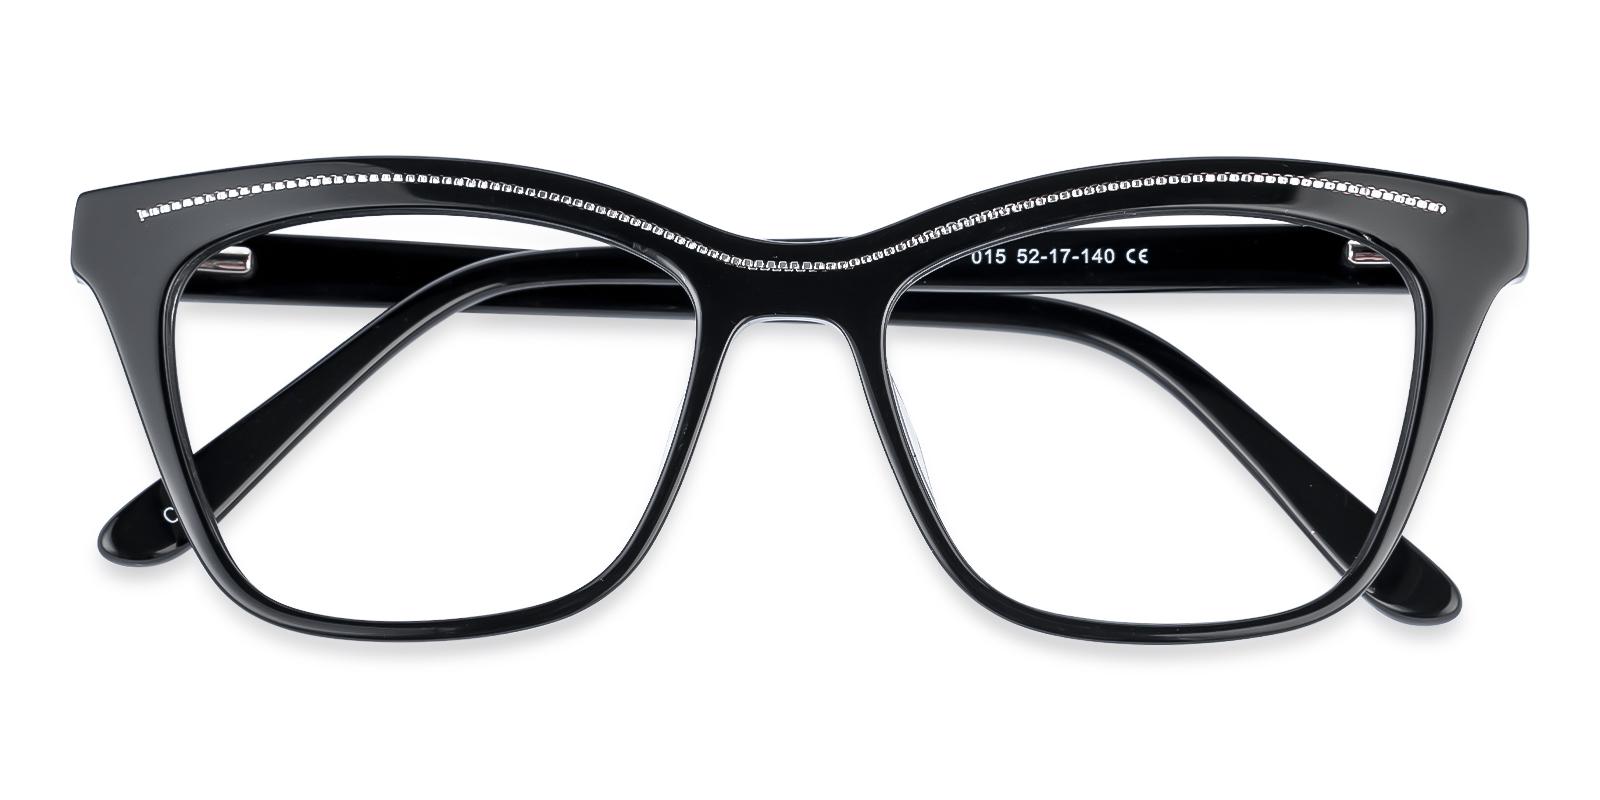 Kate Black Acetate Eyeglasses , Fashion , SpringHinges , UniversalBridgeFit Frames from ABBE Glasses